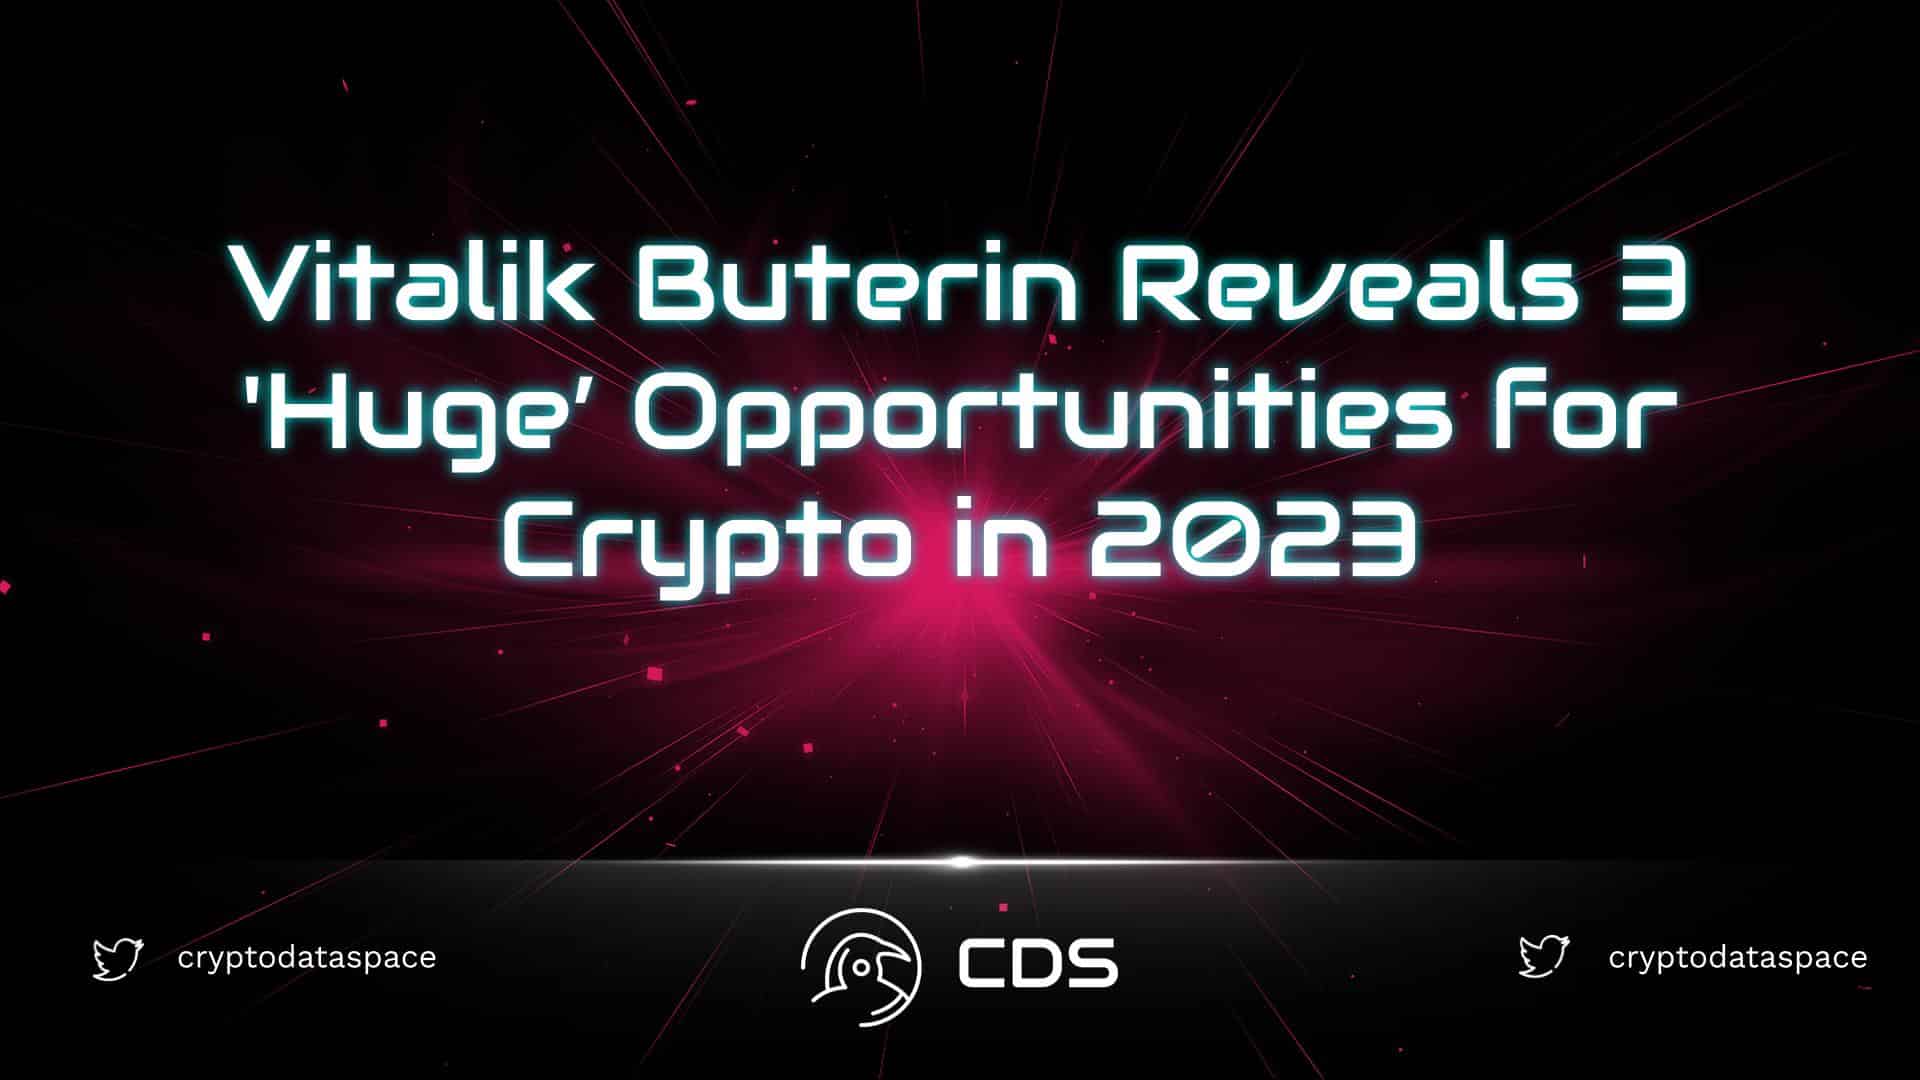 Vitalik Buterin Reveals 3 'Huge’ Opportunities for Crypto in 2023